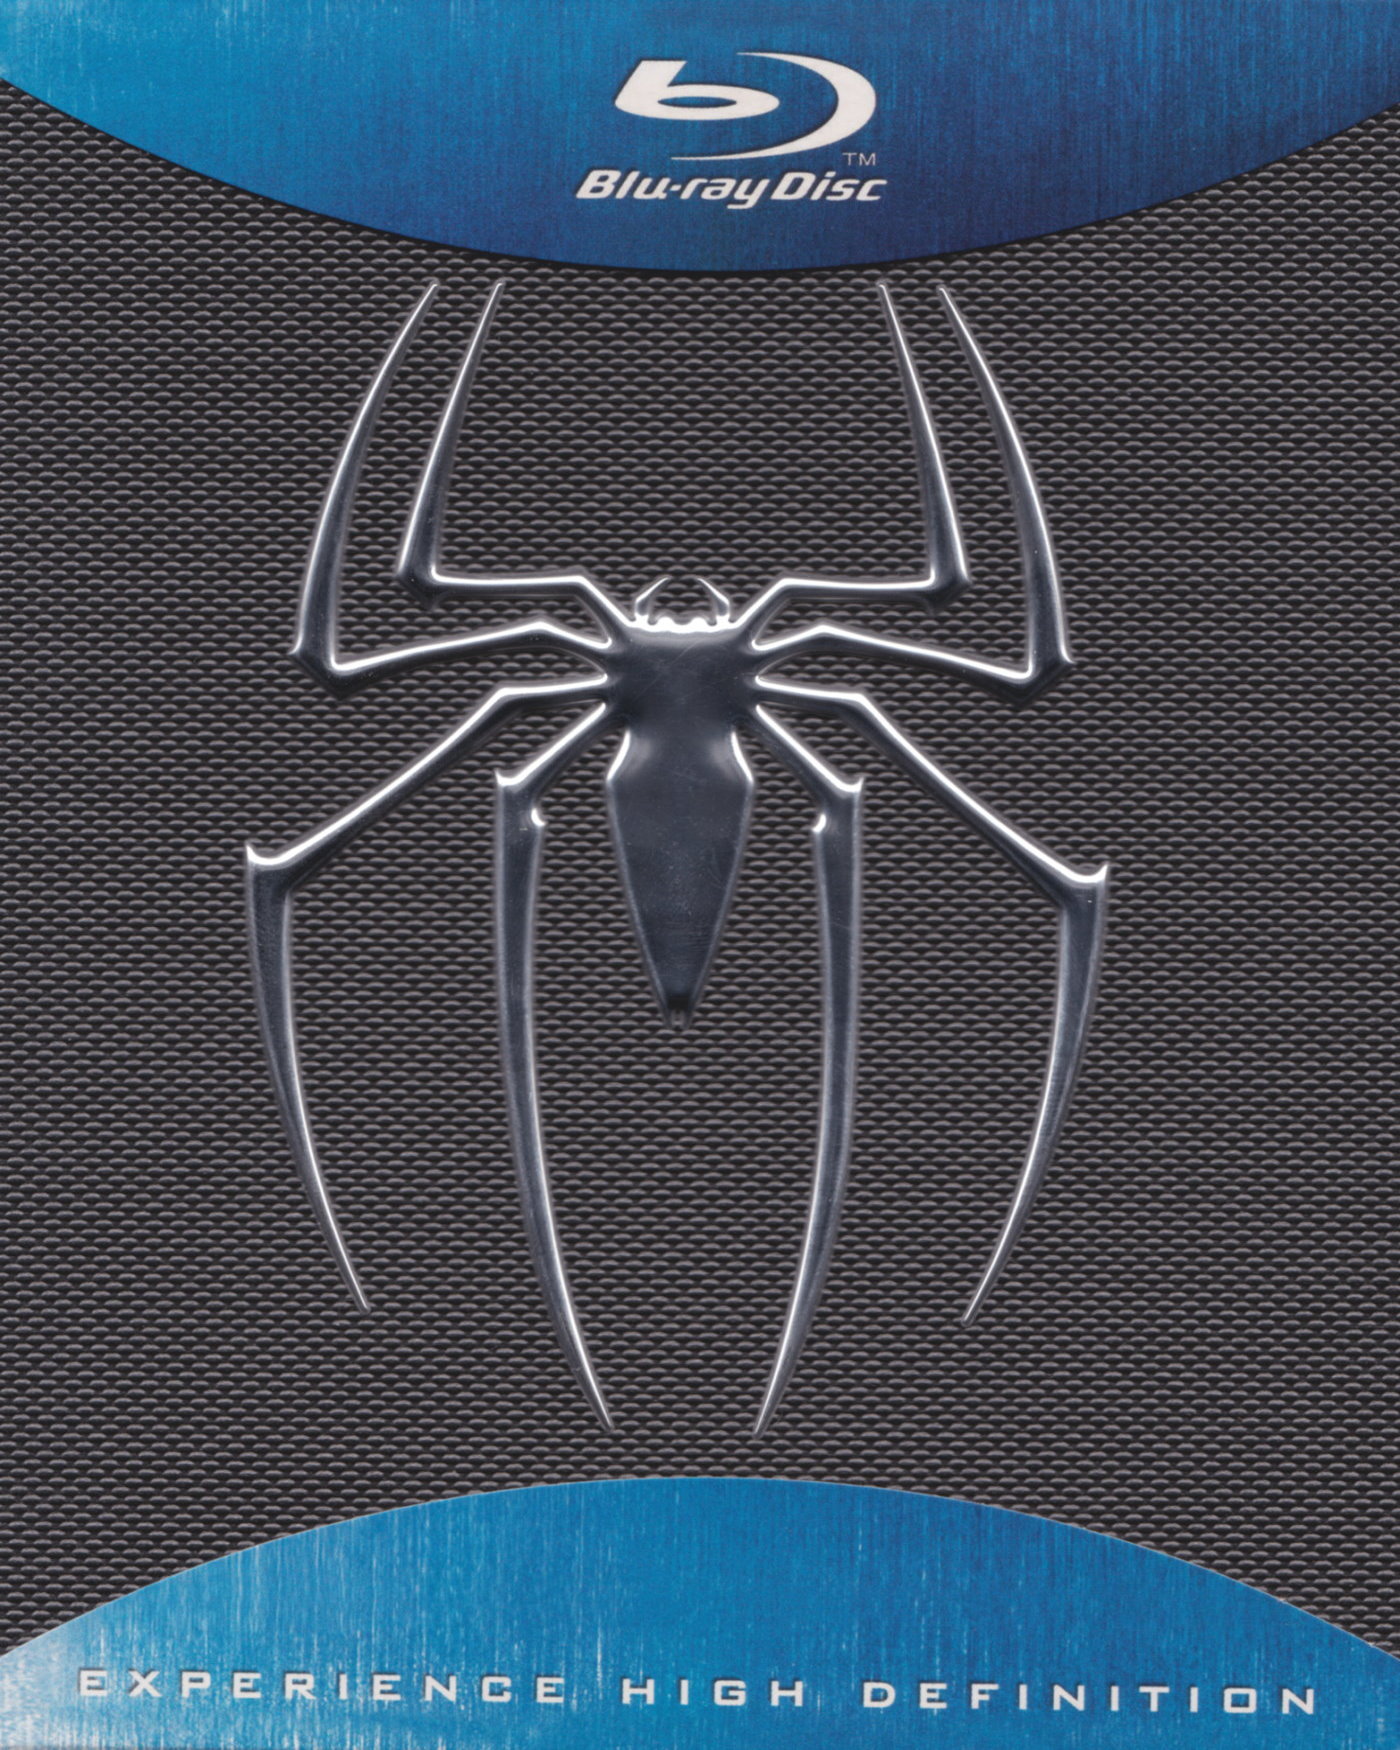 Cover - Spider-Man.jpg